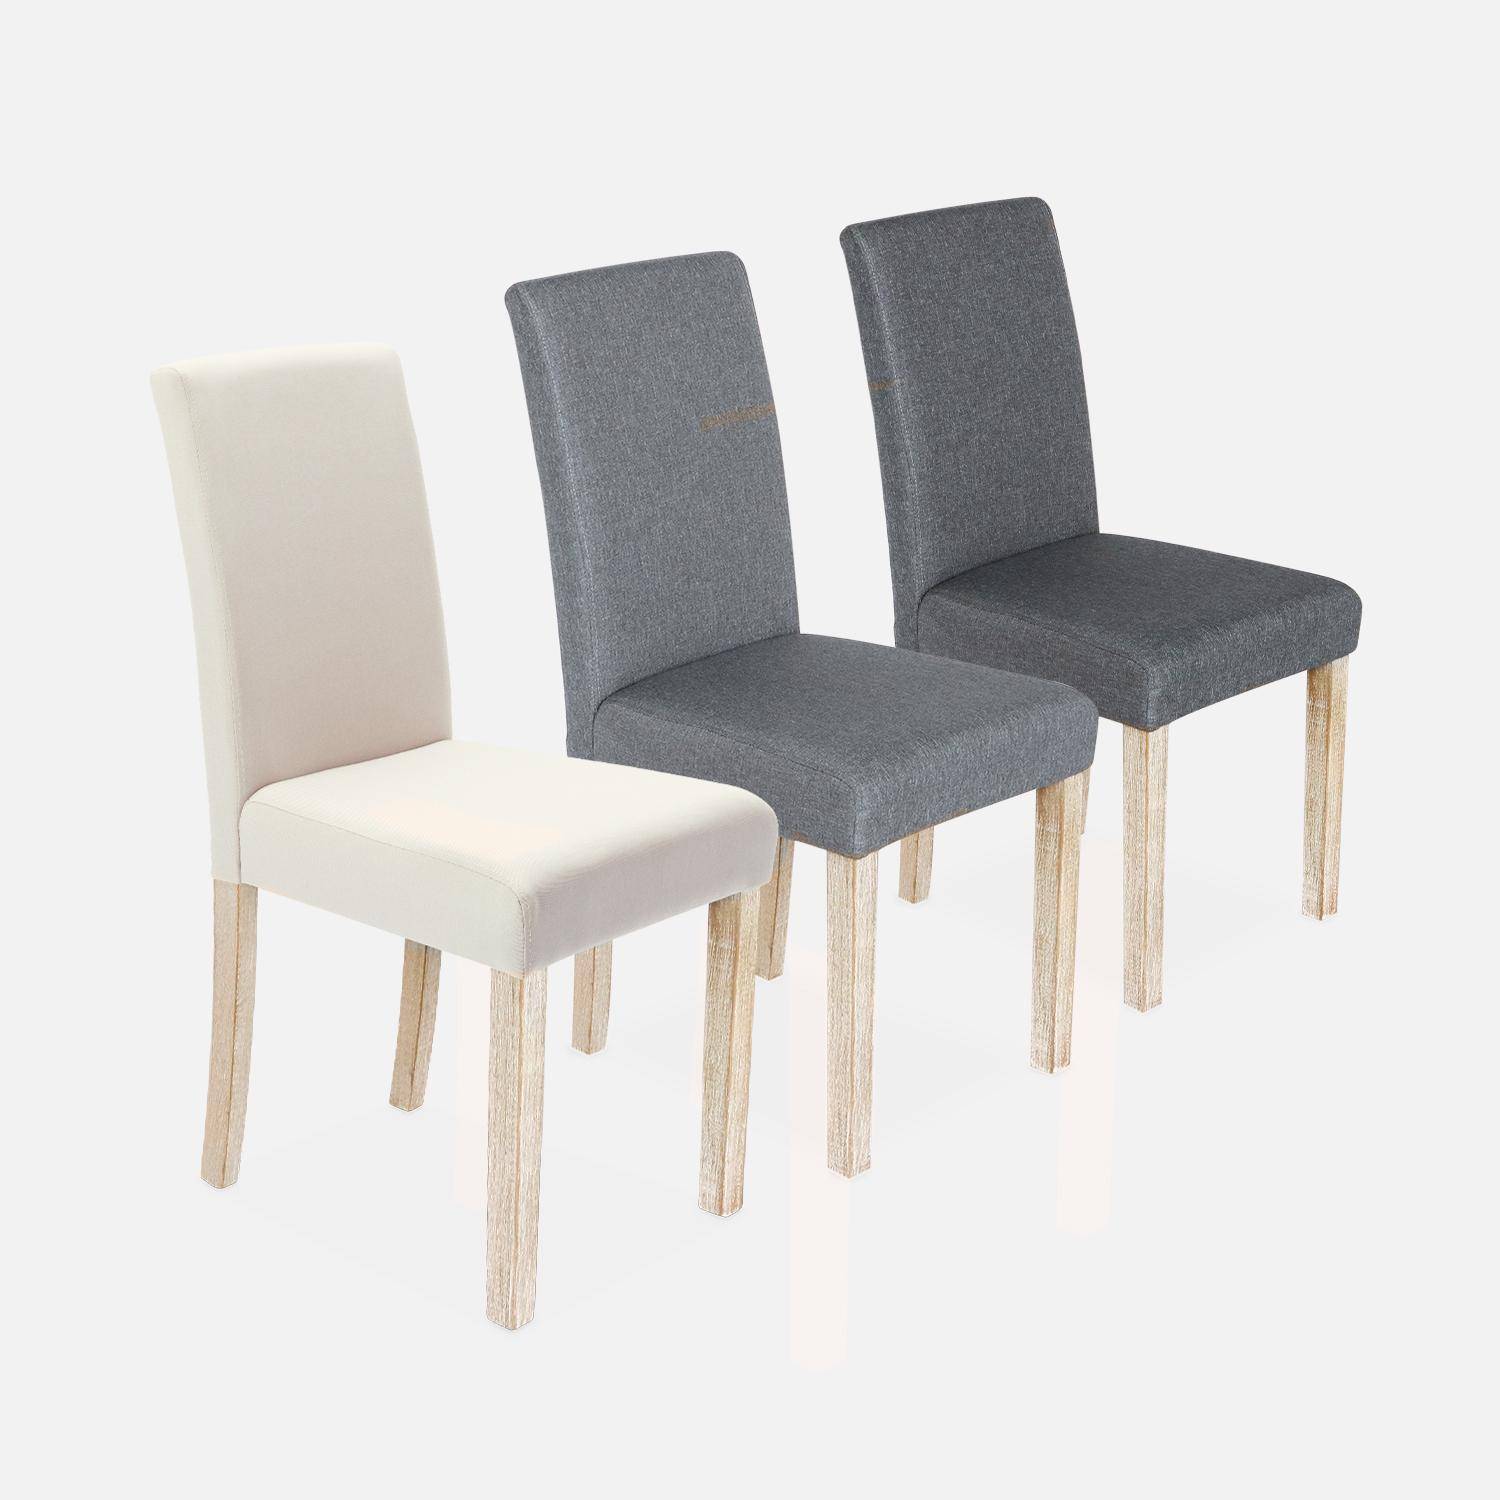 Set van 4 stoelen - stoffen stoelen, houten loodwitte poten  Photo6